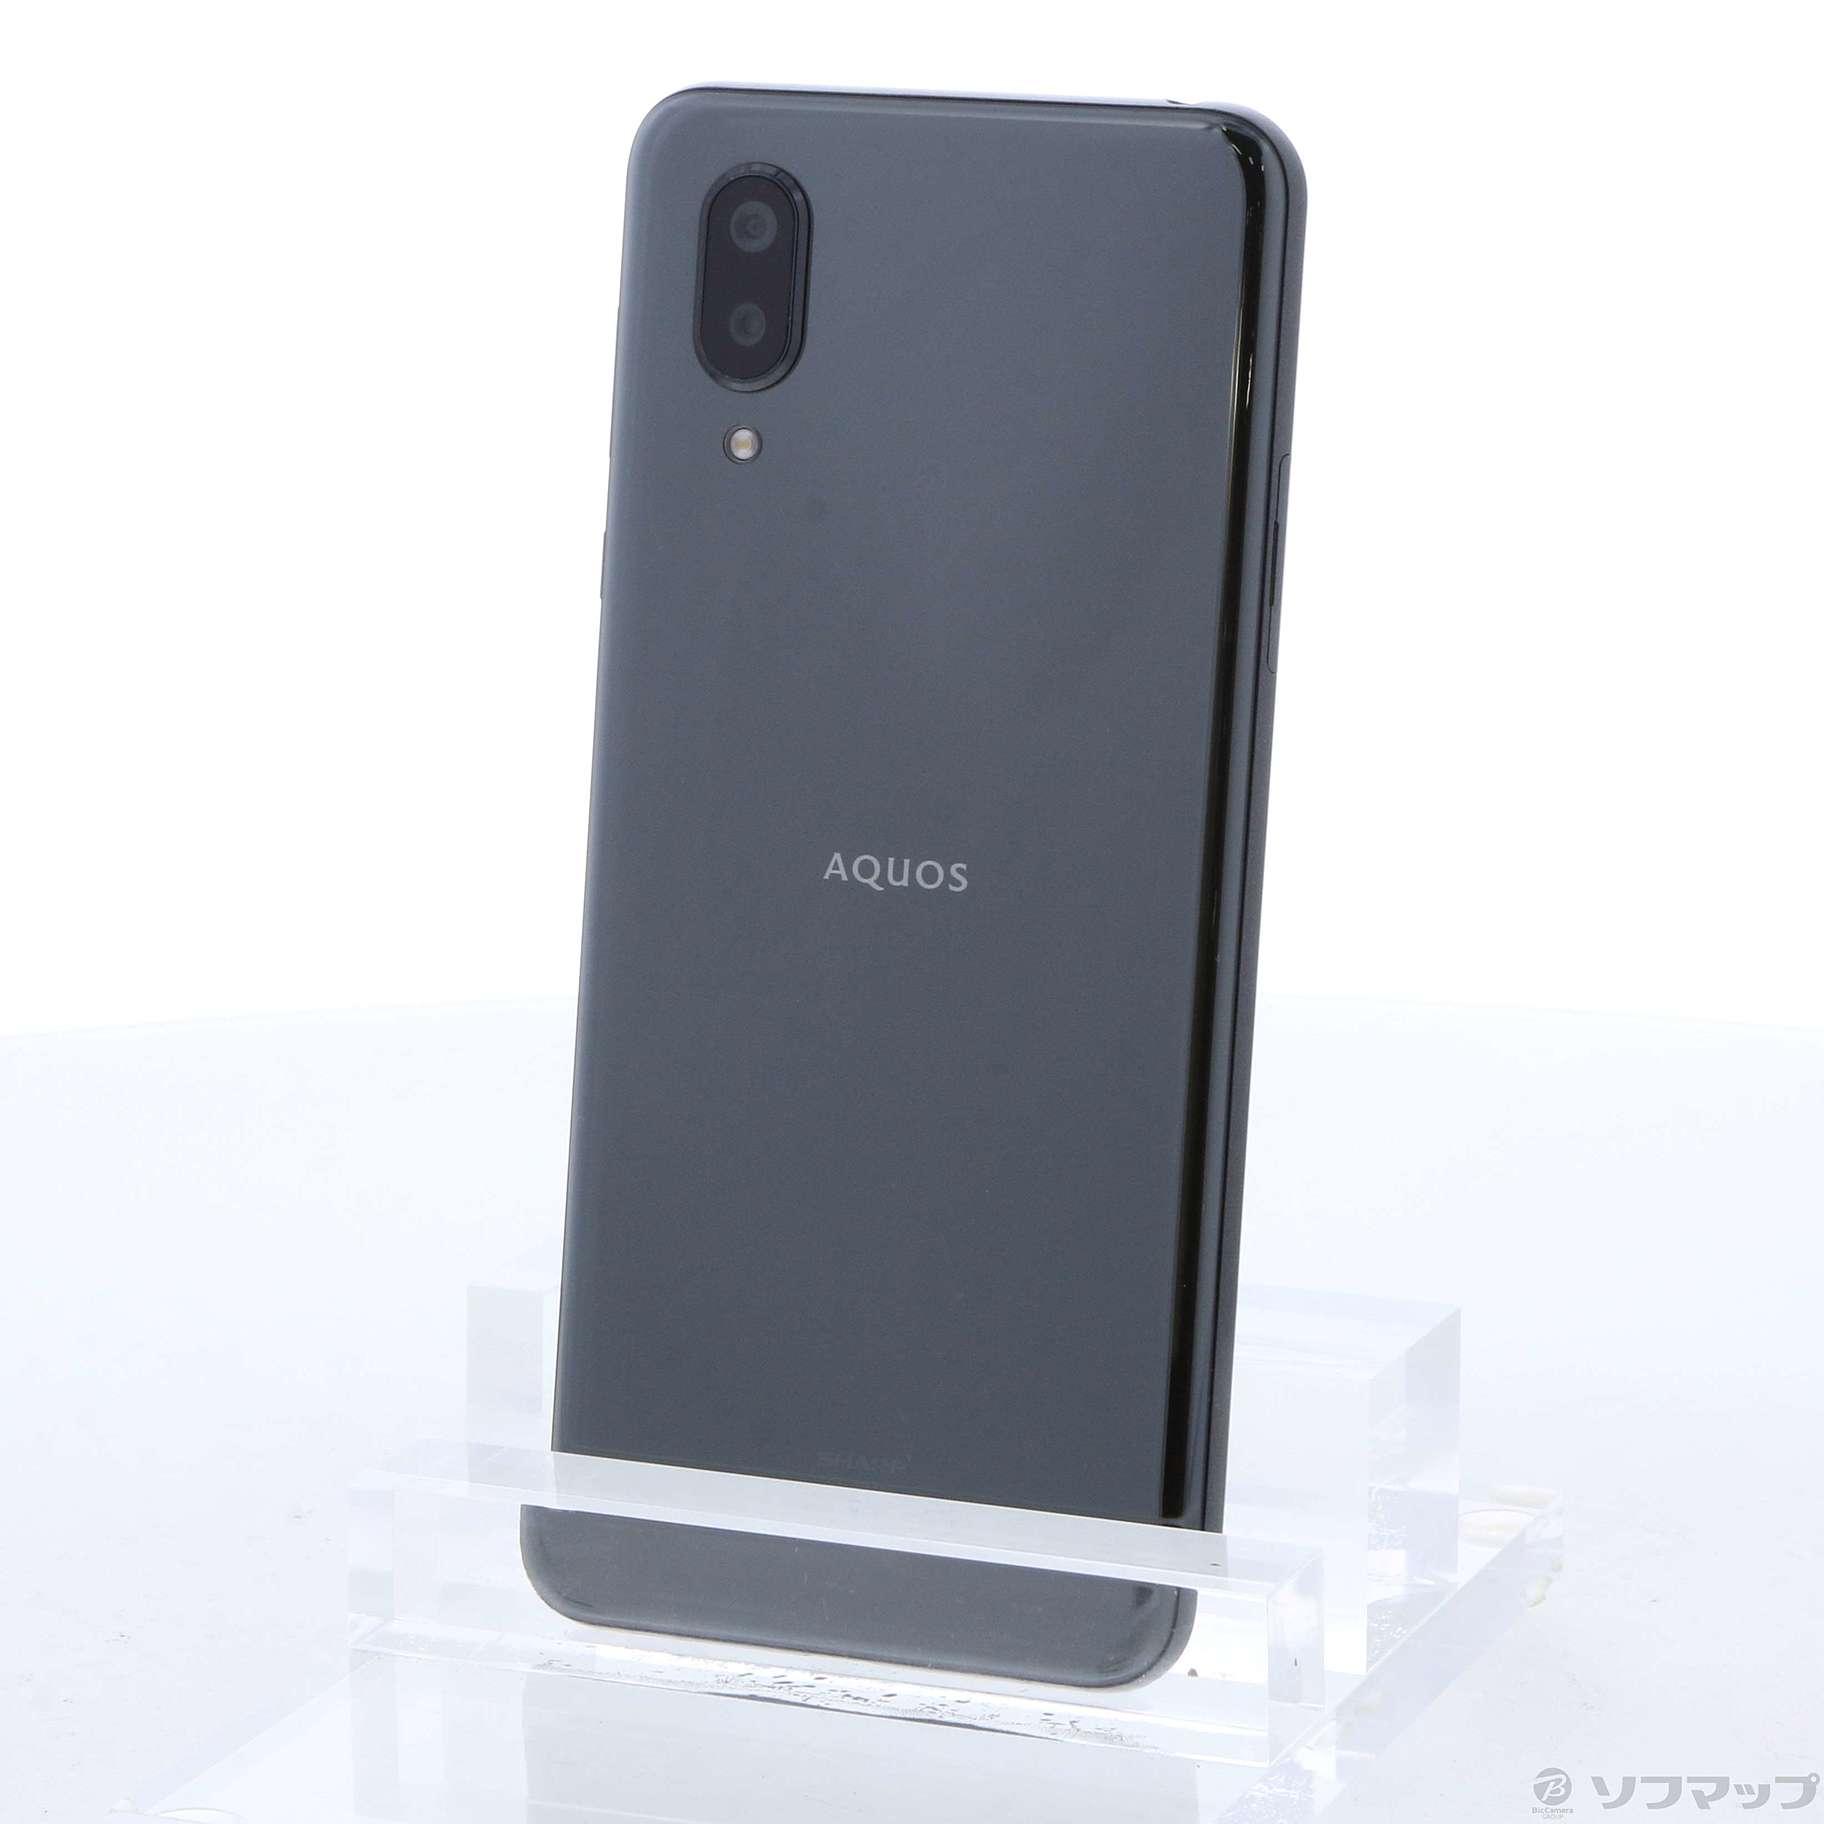 AQUOS sense3 plus simフリー スマホ 64GB ブラック